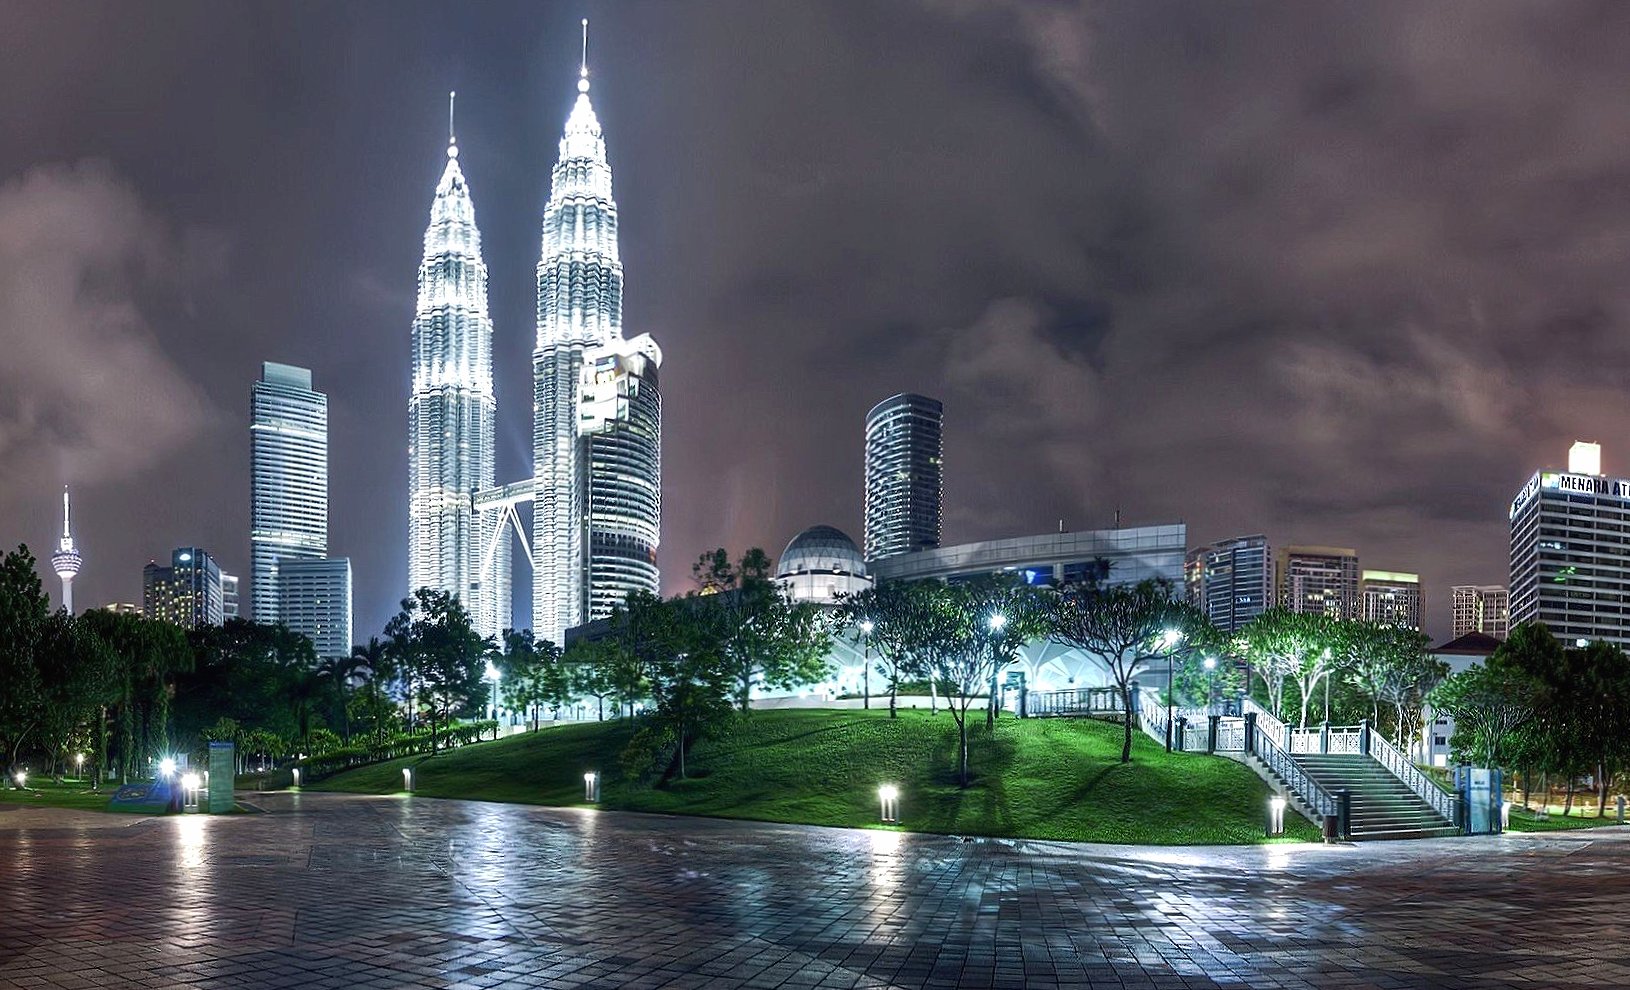 Kuala lumpur towers malaysia at 1024 x 1024 iPad size wallpapers HD quality